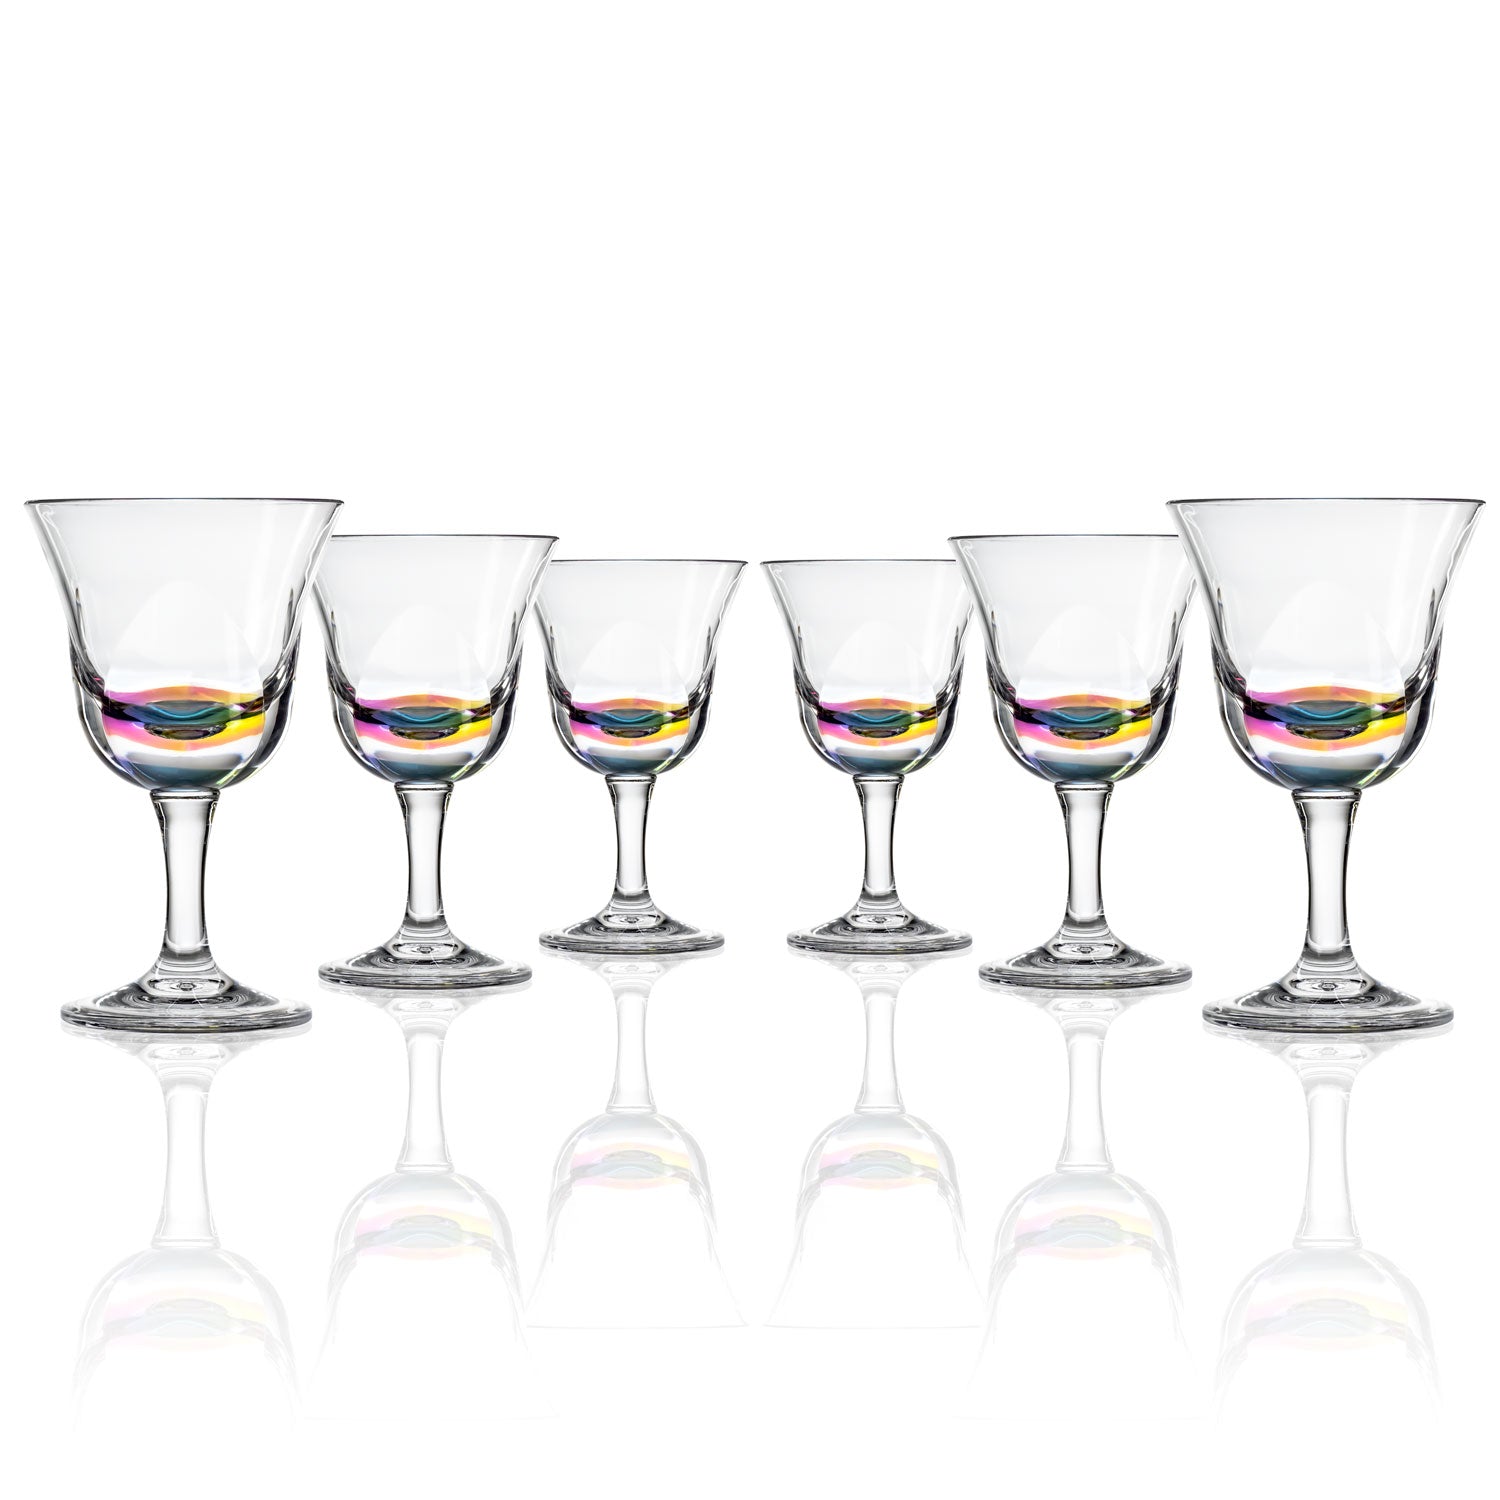 Merritt Designs Fiori 10oz Rainbow Acrylic Wine Stemware